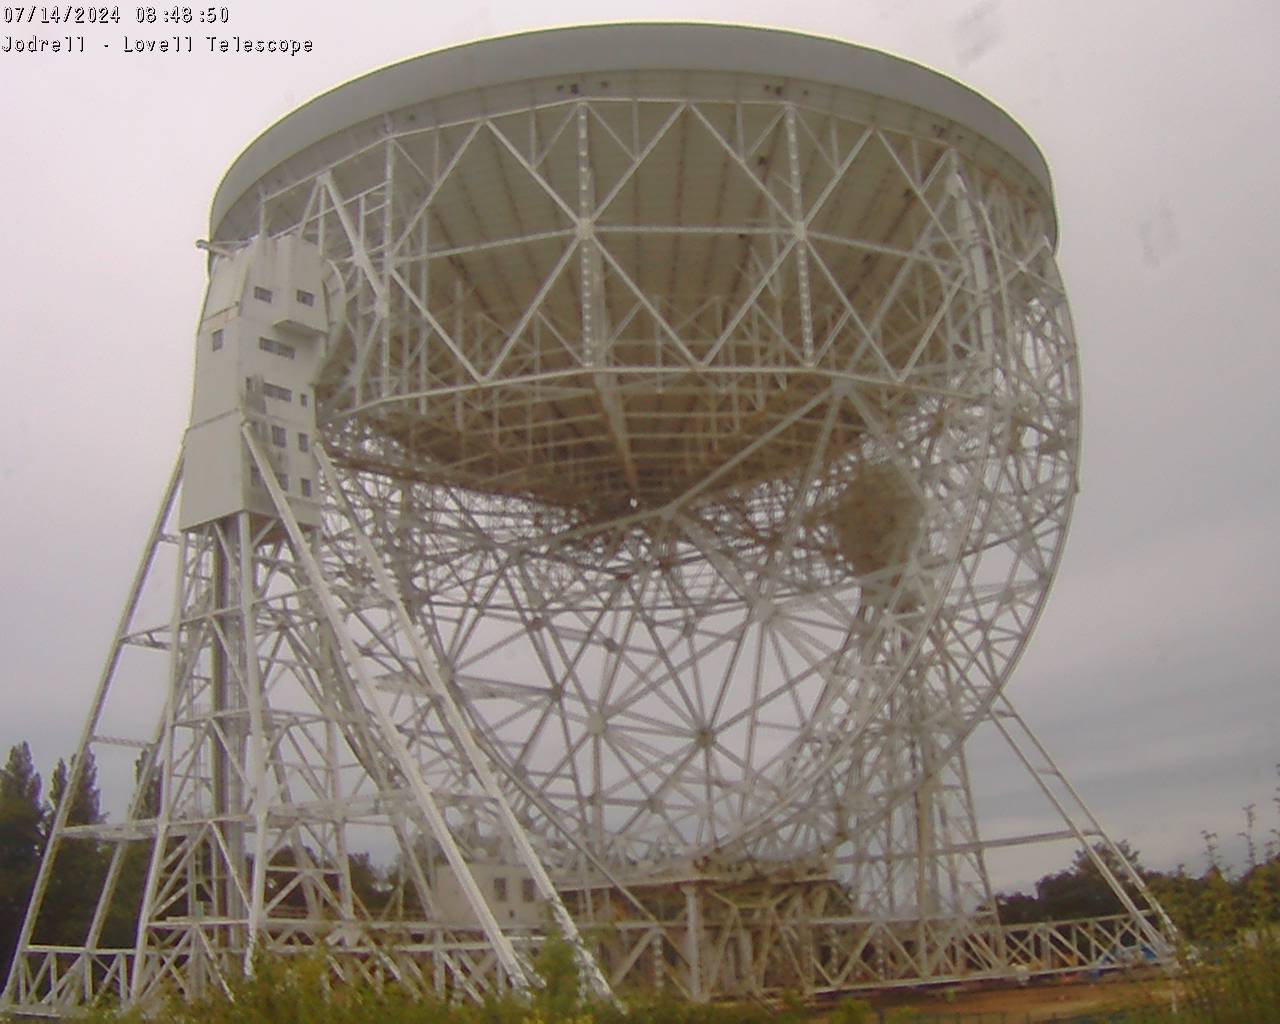 Jodrell Bank Observatory Fr. 08:49